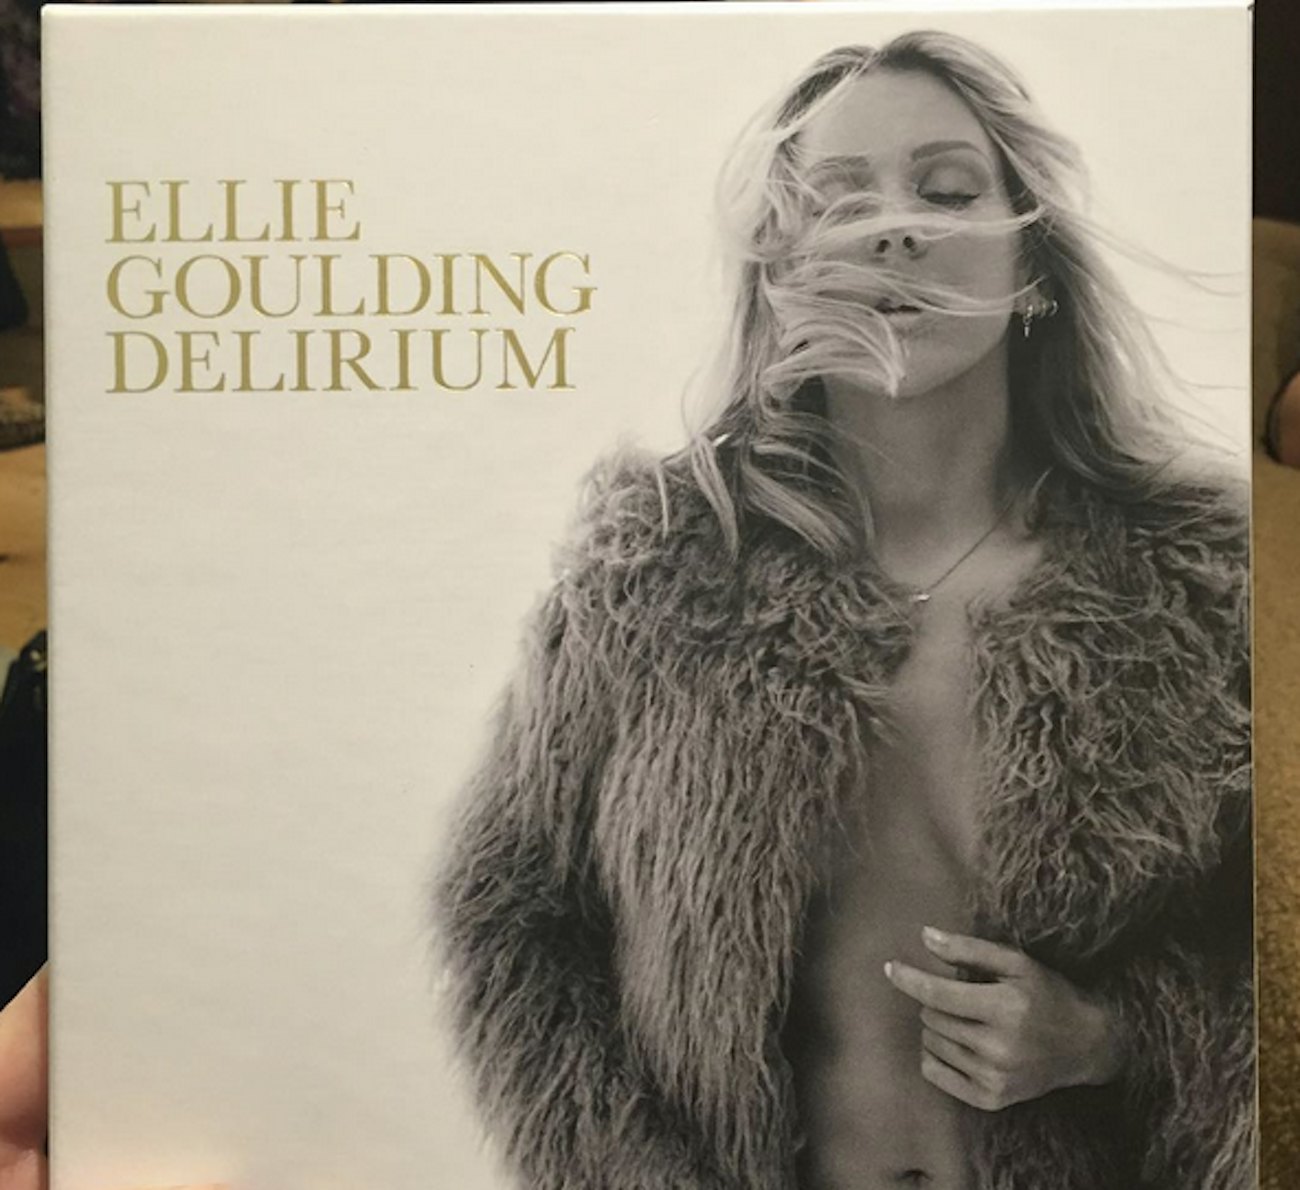 ellie goulding albums 2015